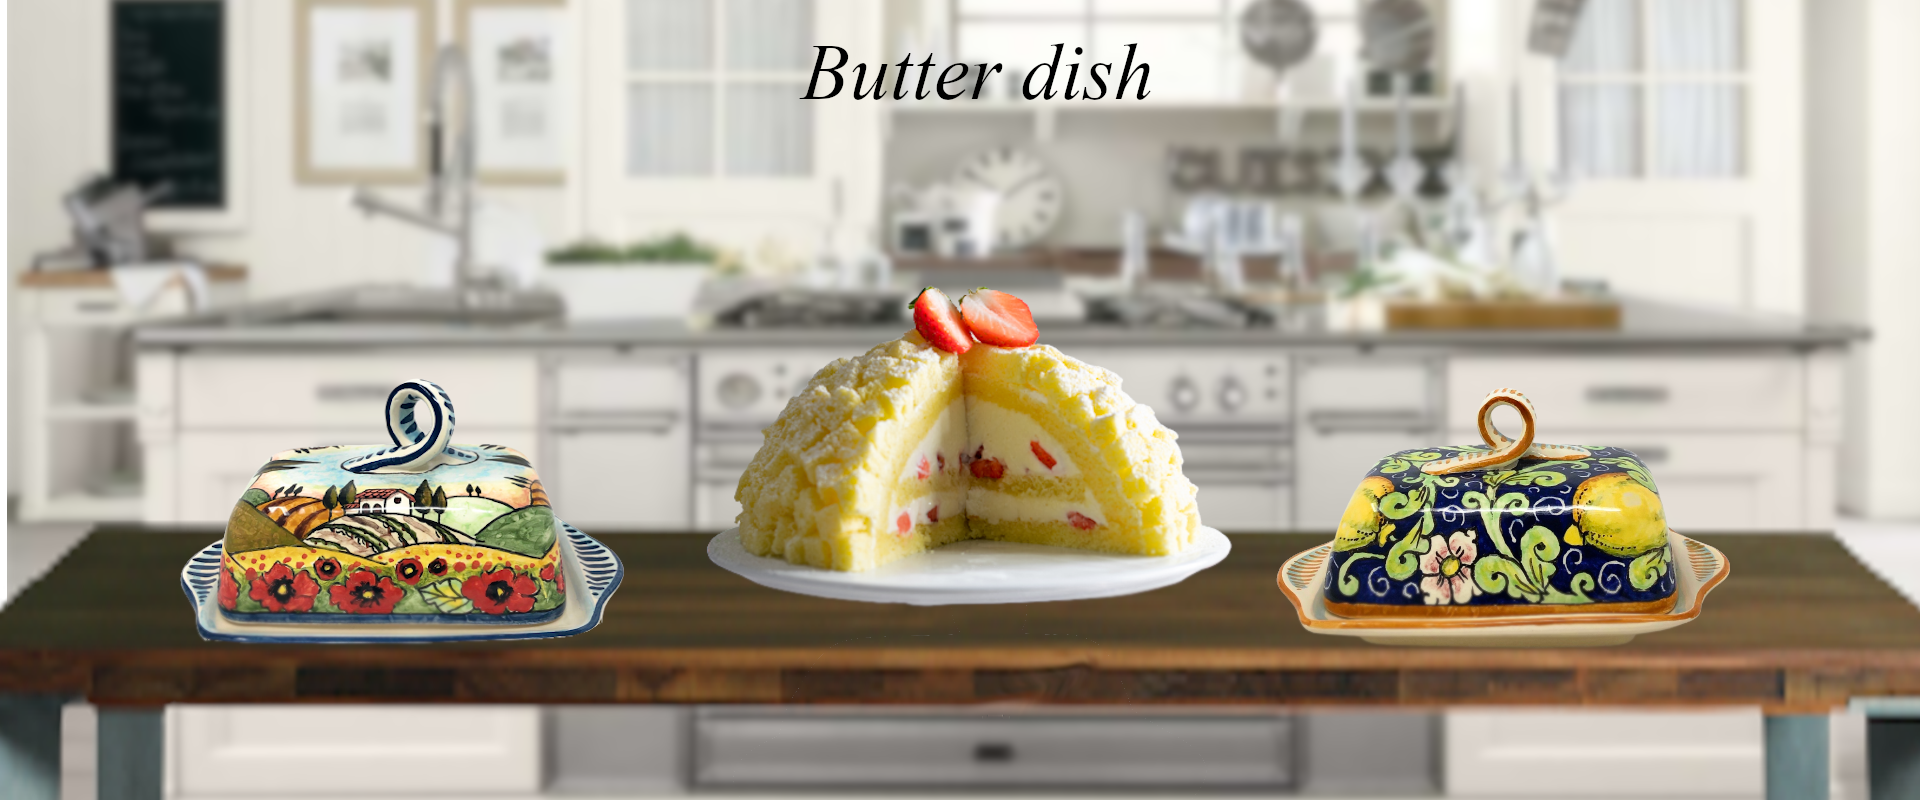 butter dish